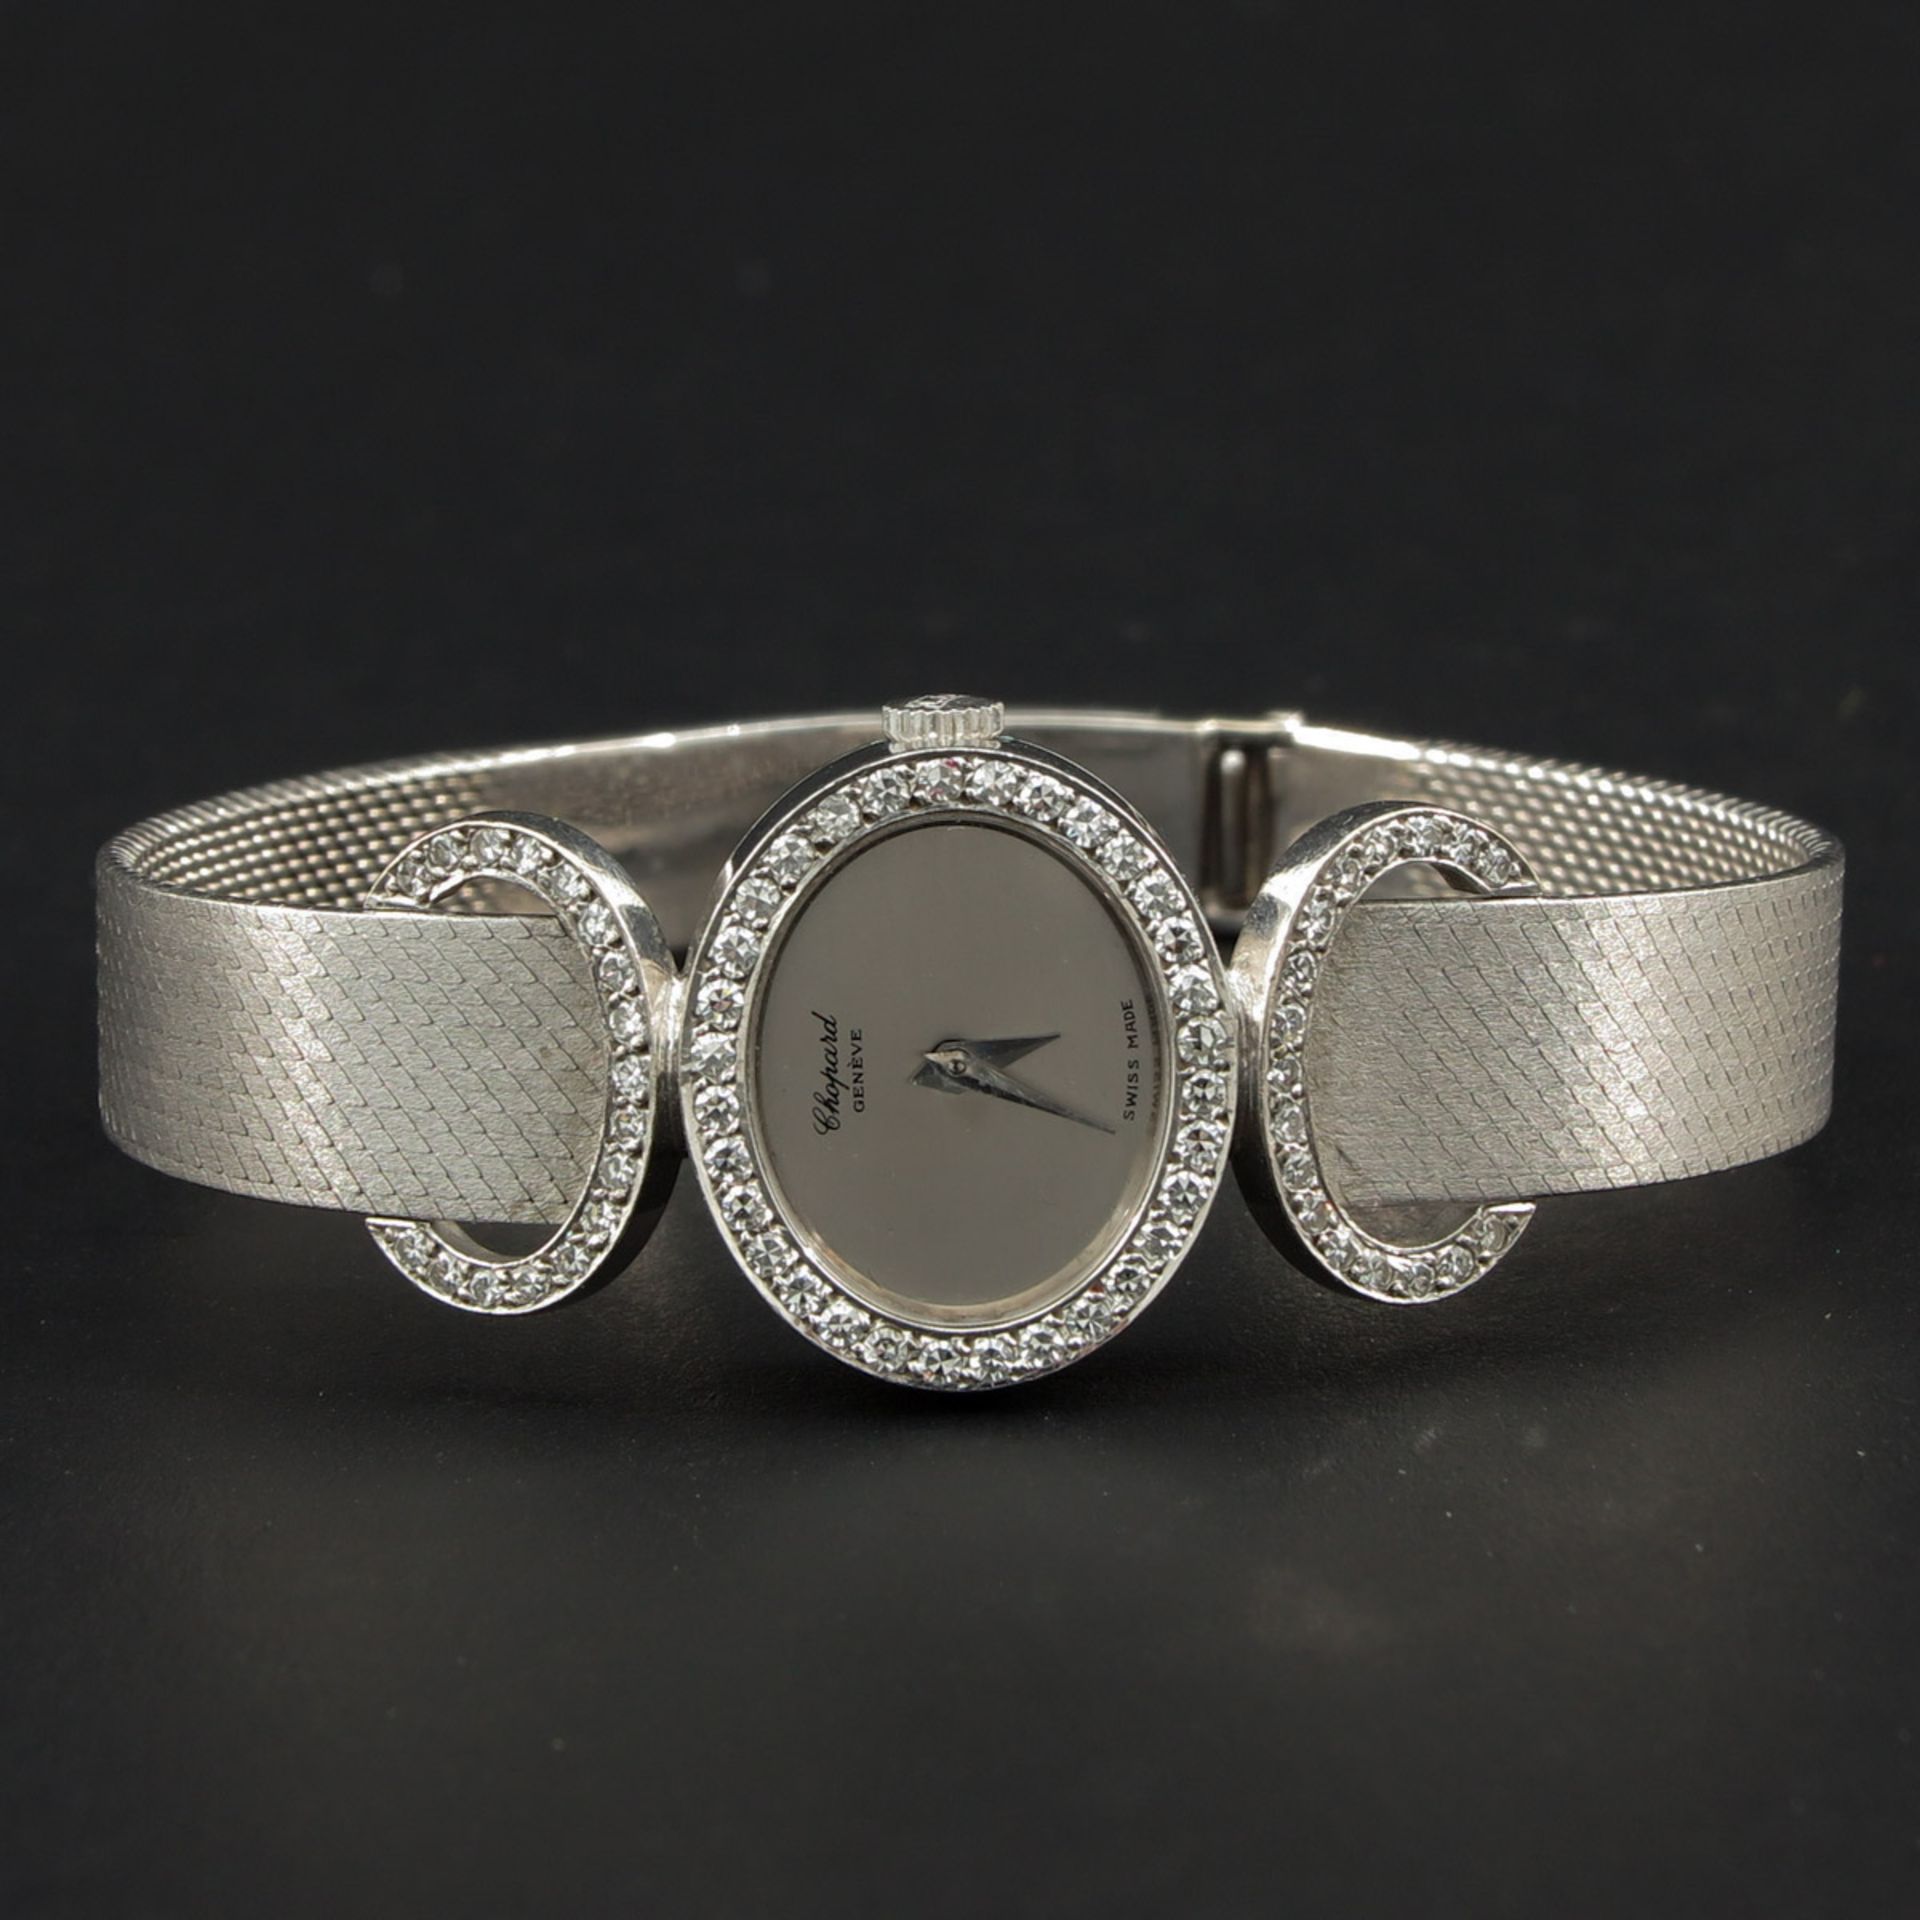 A Ladies 18KG Diamond Chopard Watch